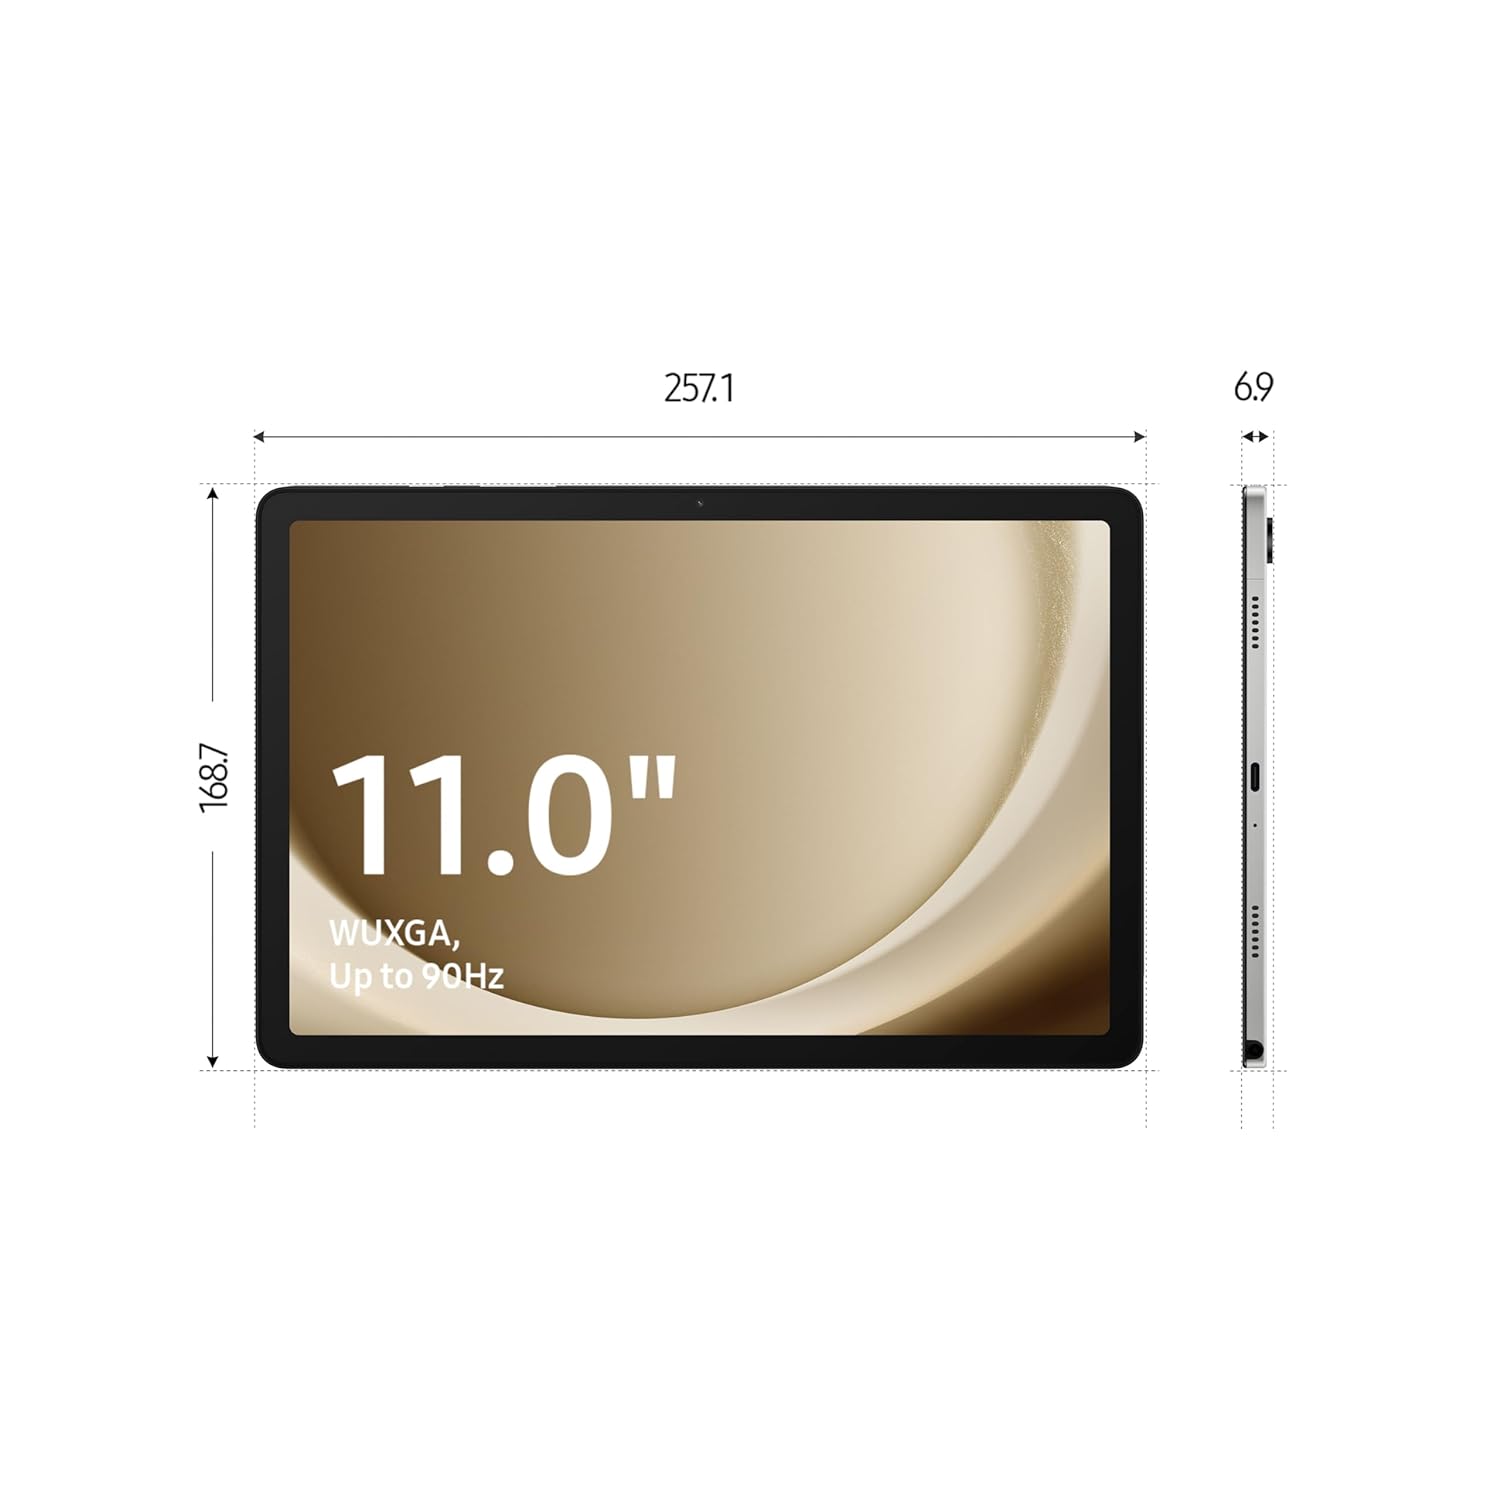 Samsung Galaxy Tab A9+ 27.94 cm (11.0 inch) Display, RAM 8 GB, ROM 128 GB Mahajan Electronics Online